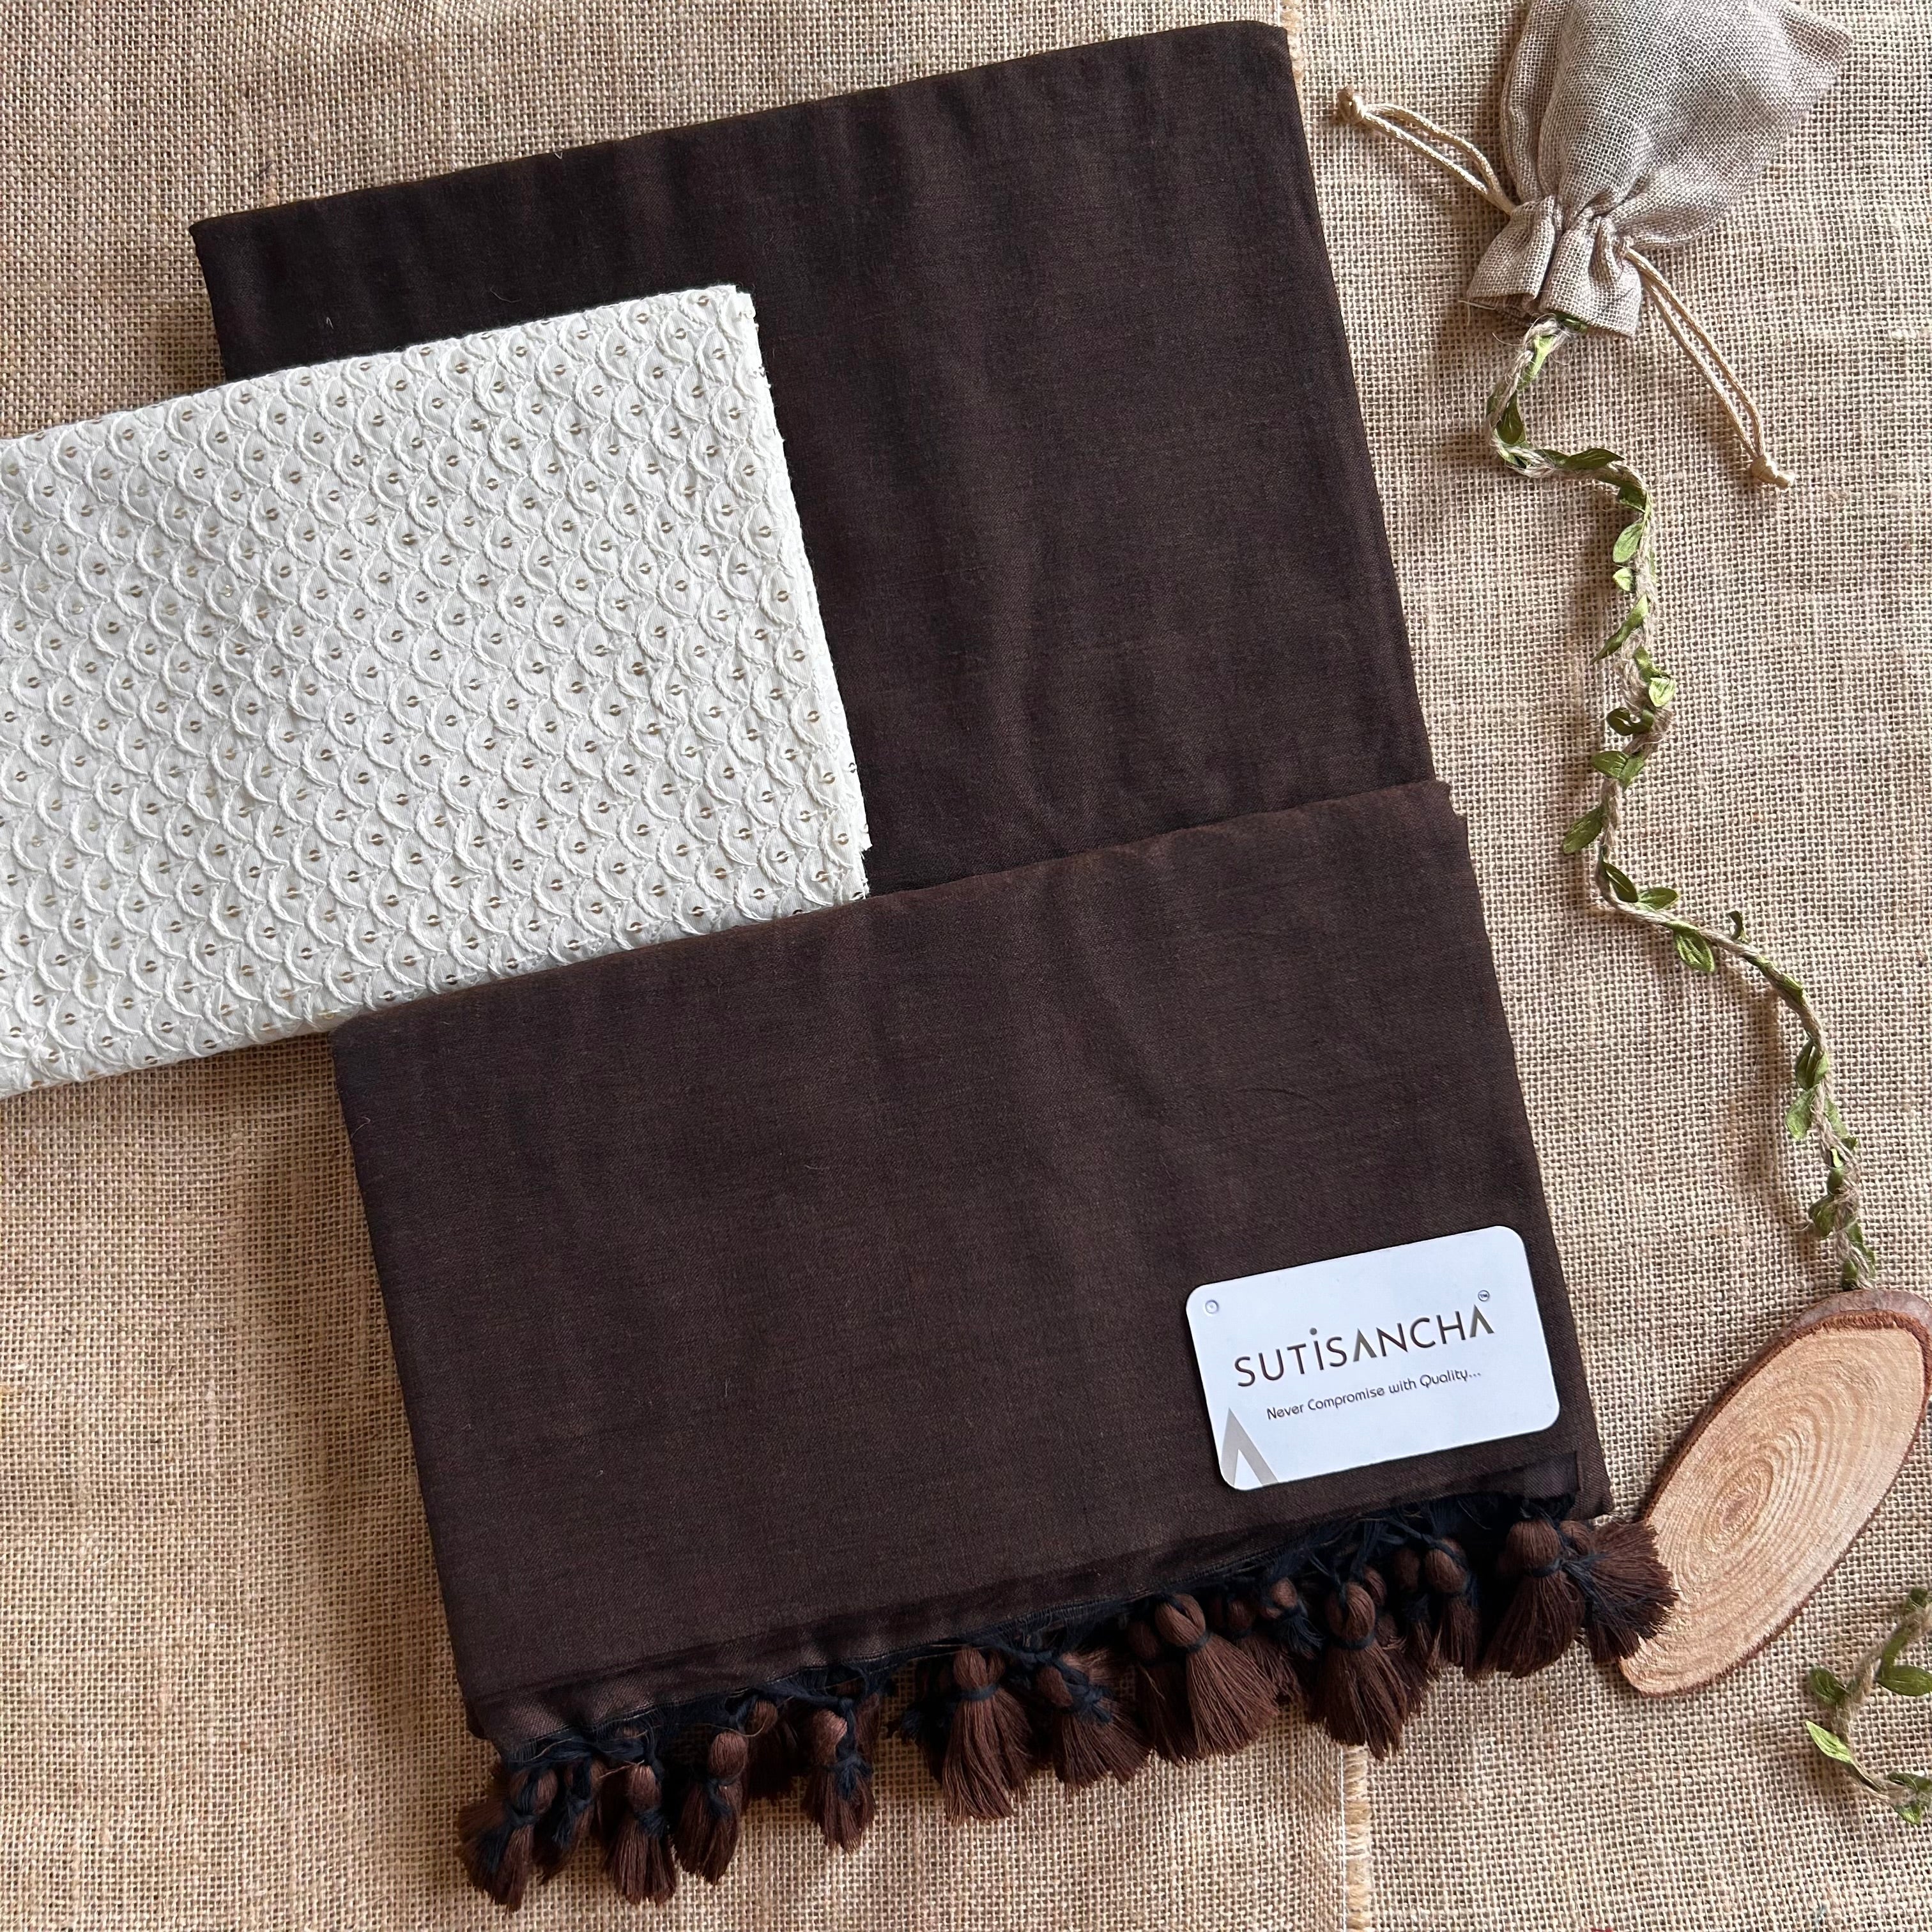 Sutisancha Brown Handloom Cotton Saree with Designer Blouse